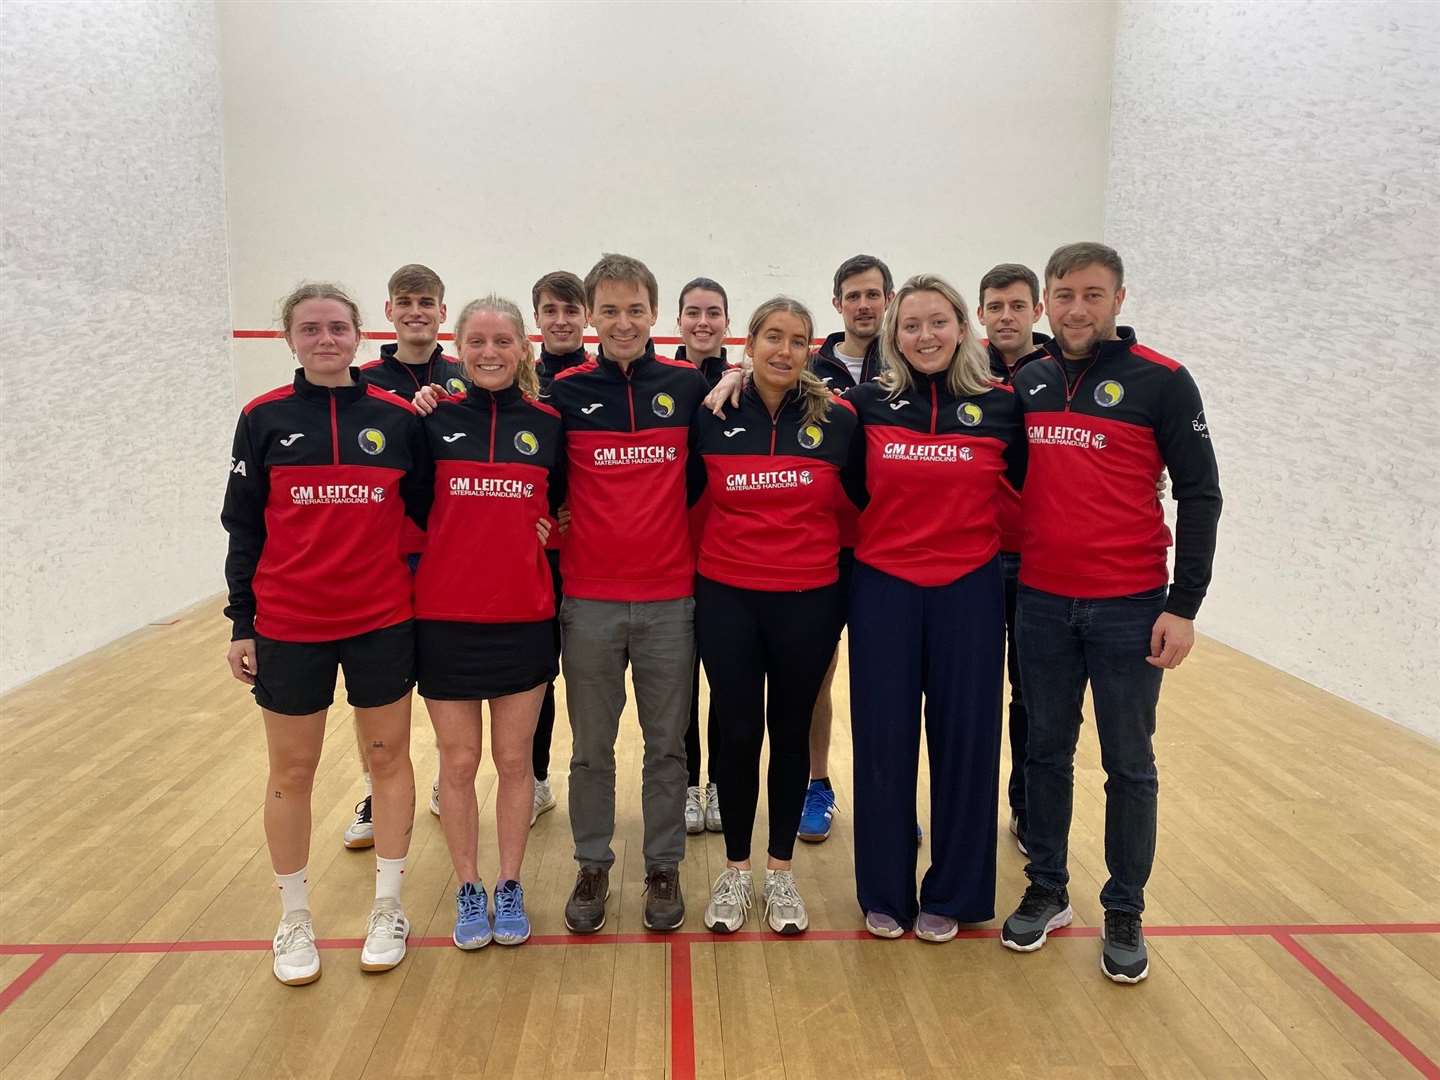 Inverness Squash Club men and women